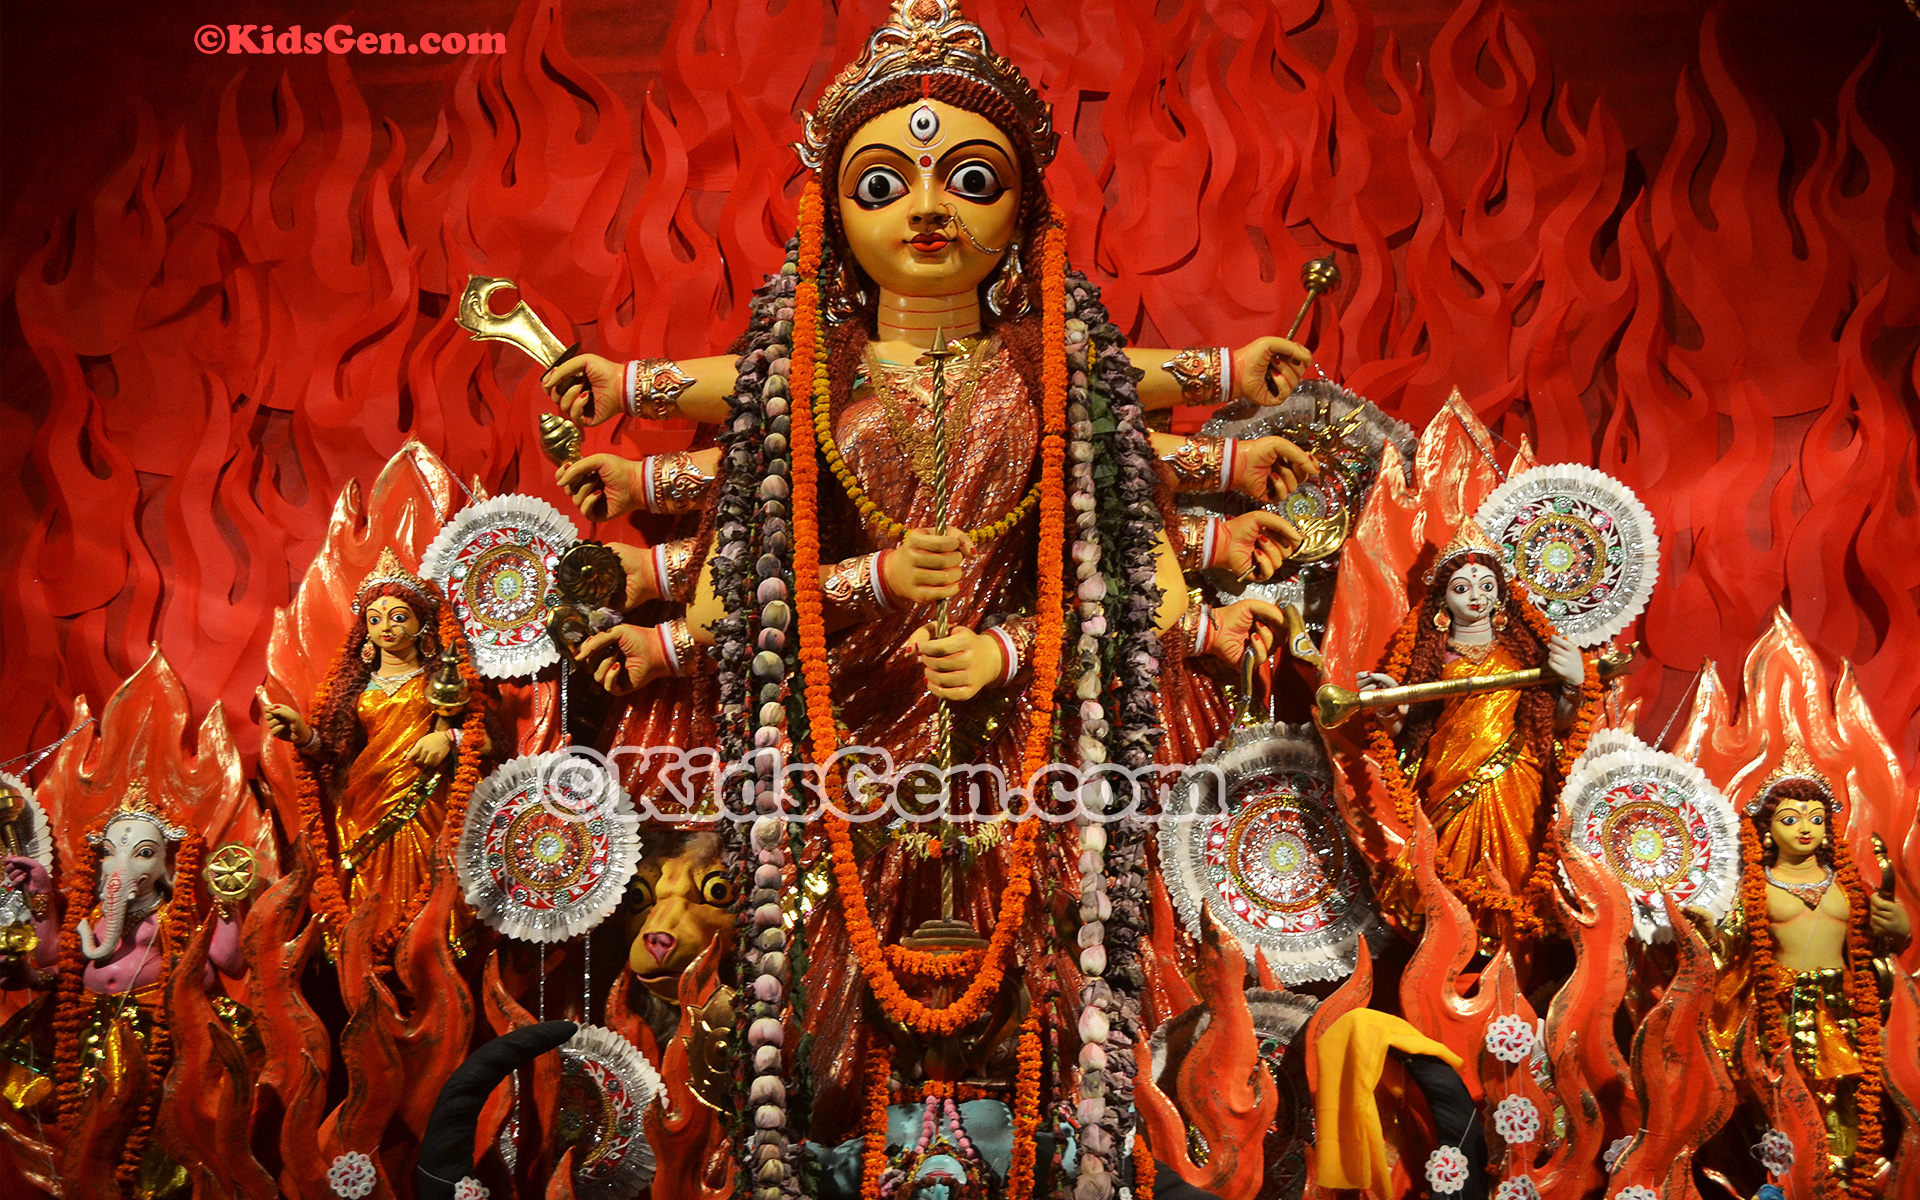 Durga Puja Wallpapers | Free HD Durga Puja Wallpapers